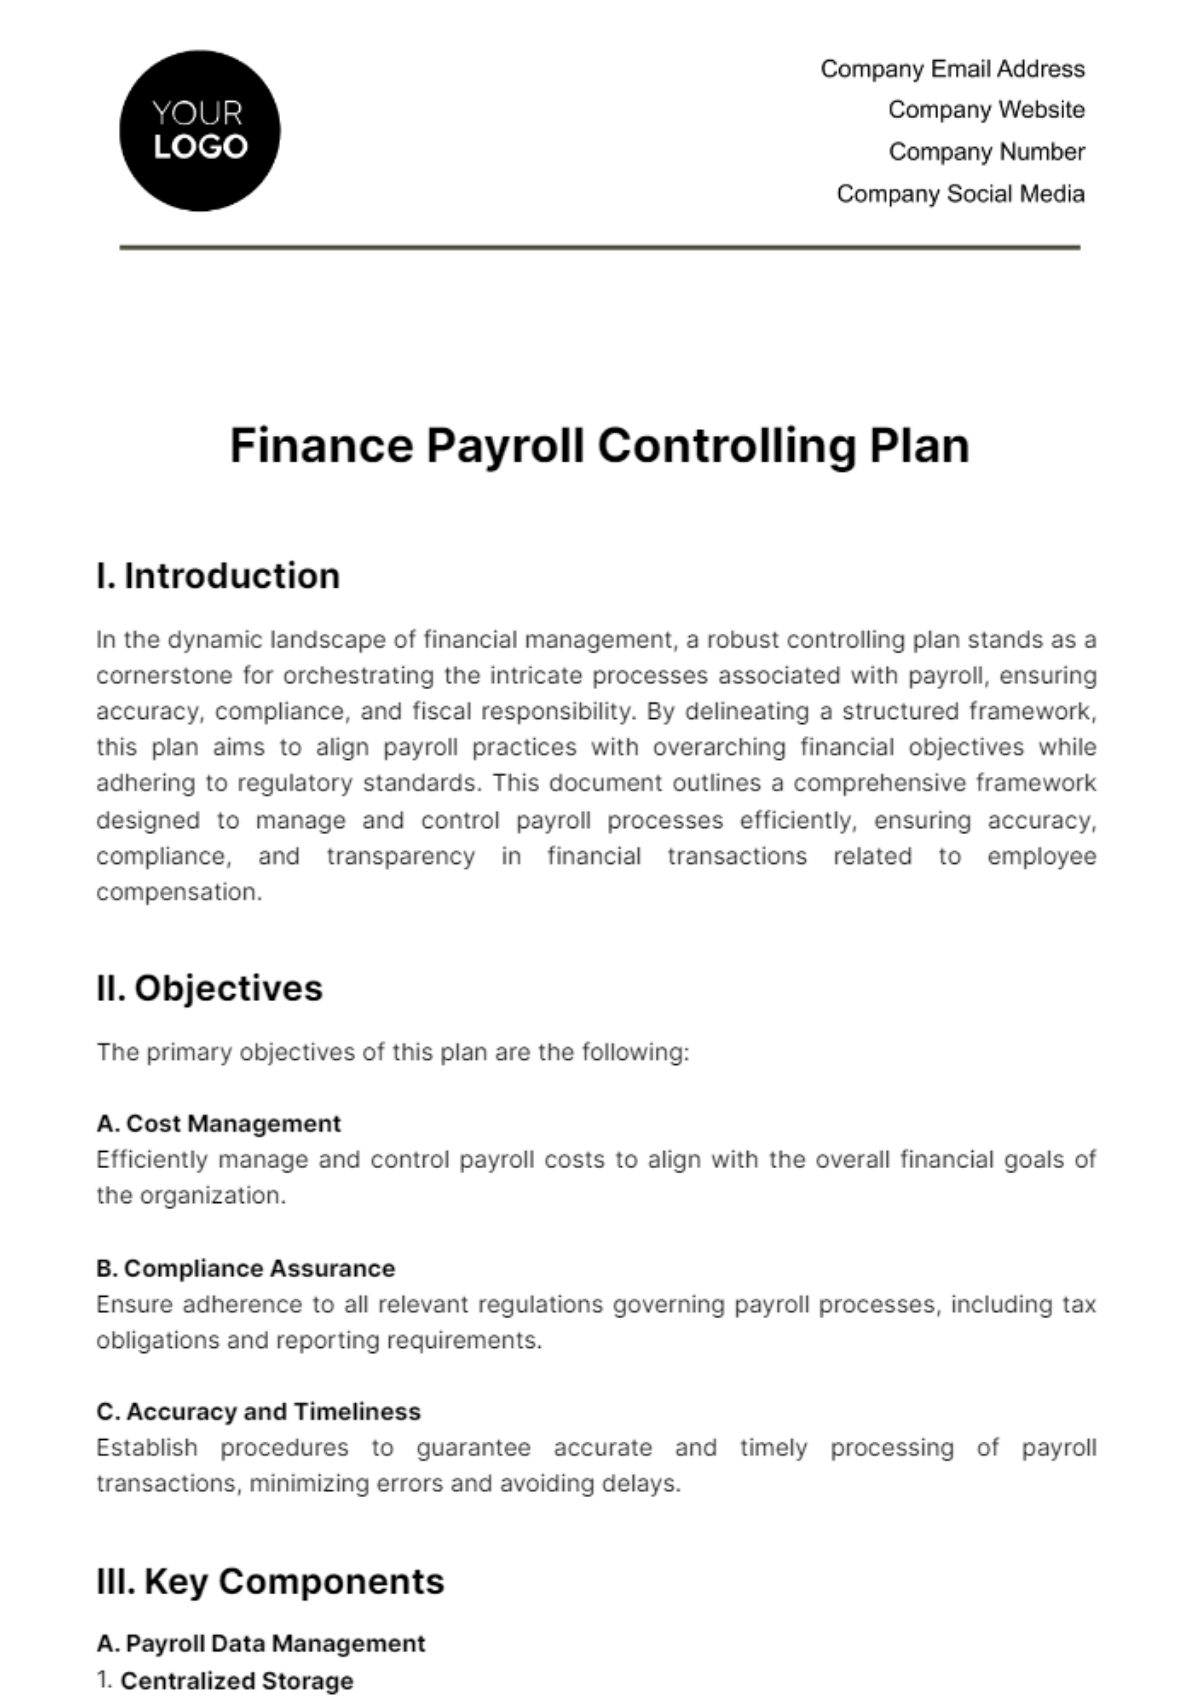 Free Finance Payroll Controlling Plan Template